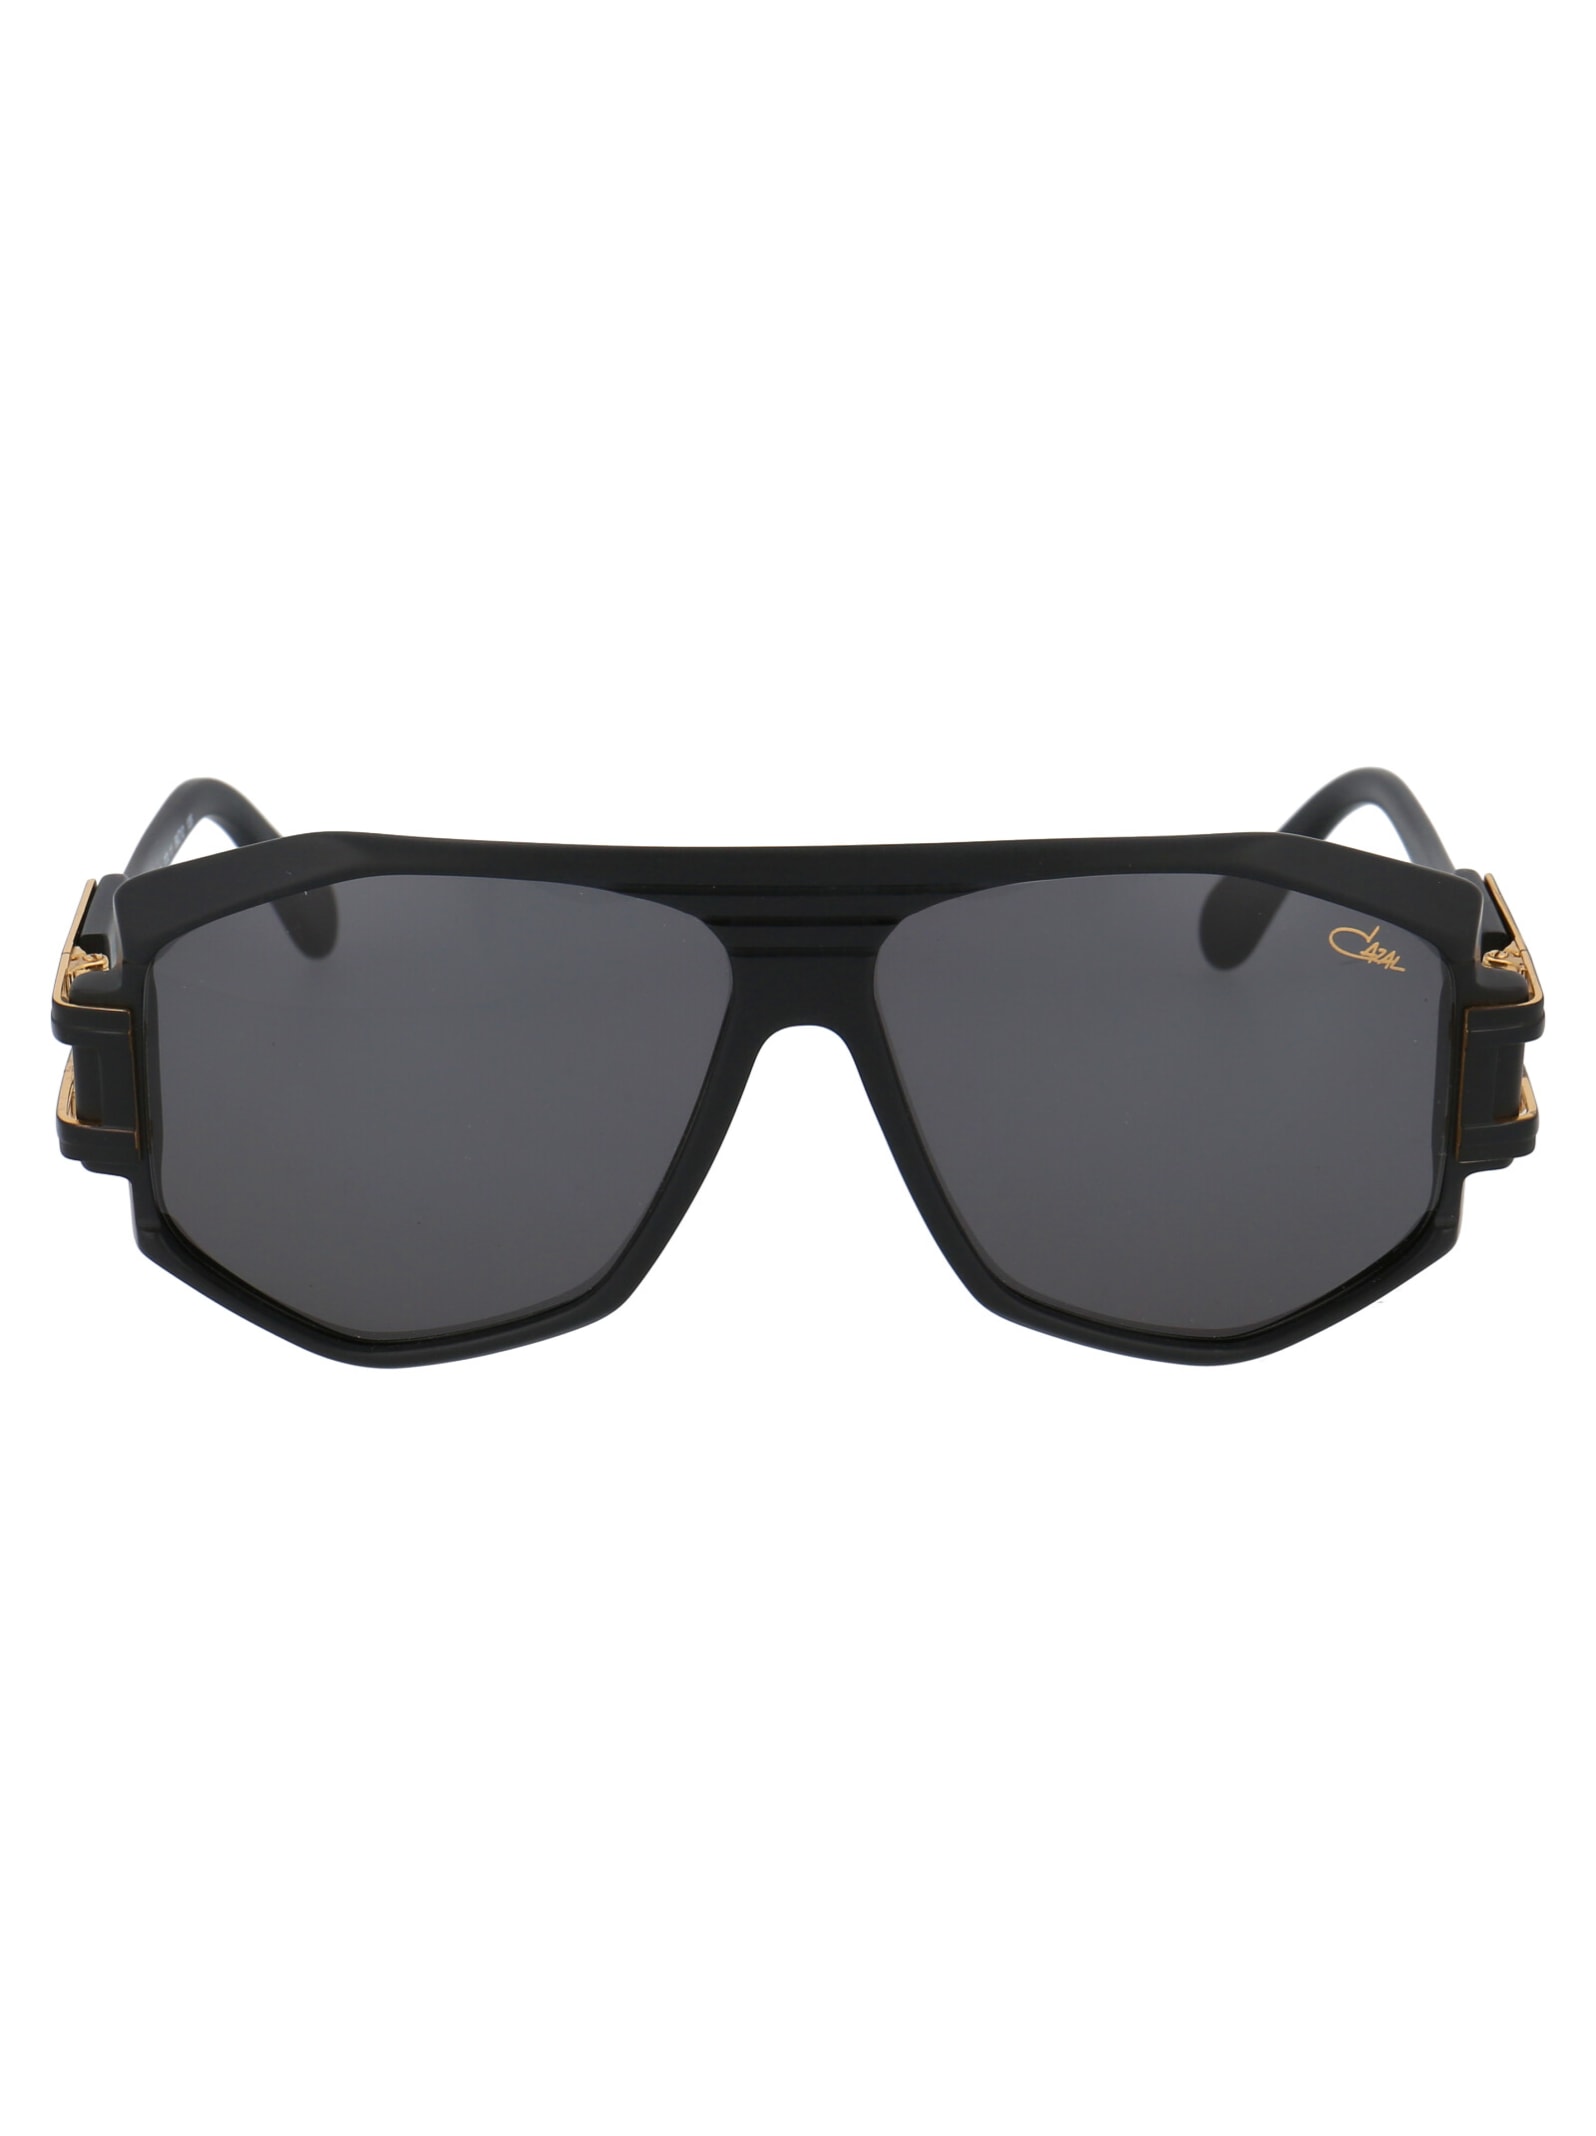 Cazal Mod. 163/301 Sunglasses